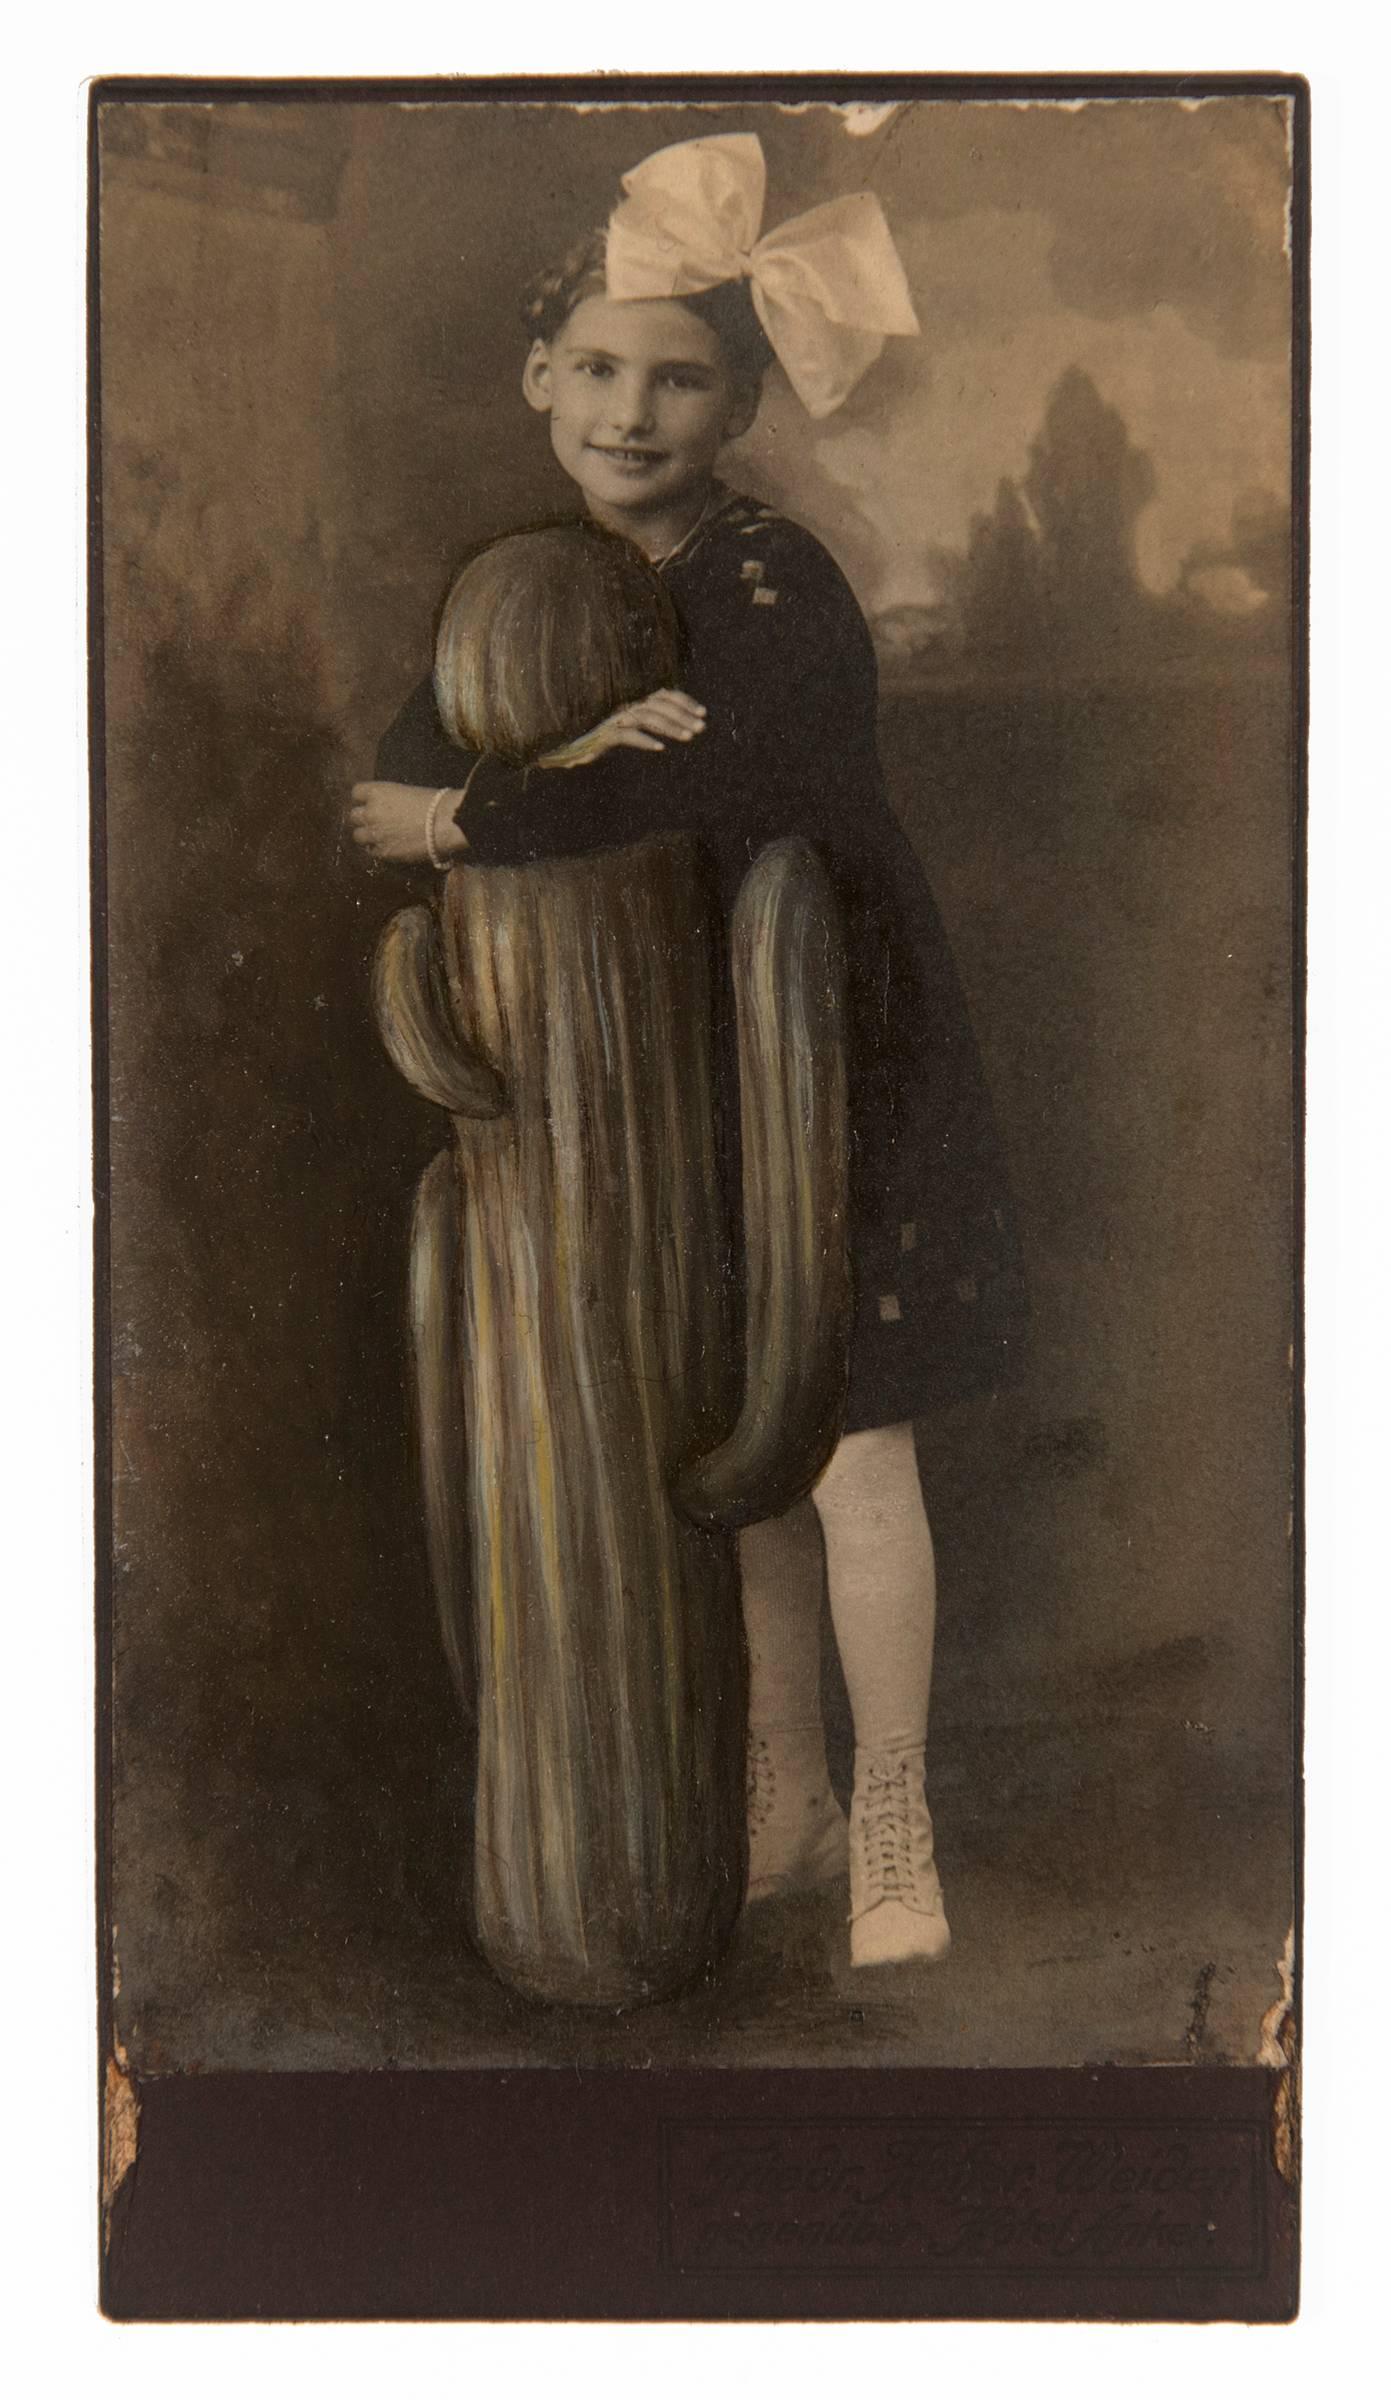 Jana Paleckova Figurative Photograph - Untitled (Girl hugging cactus)